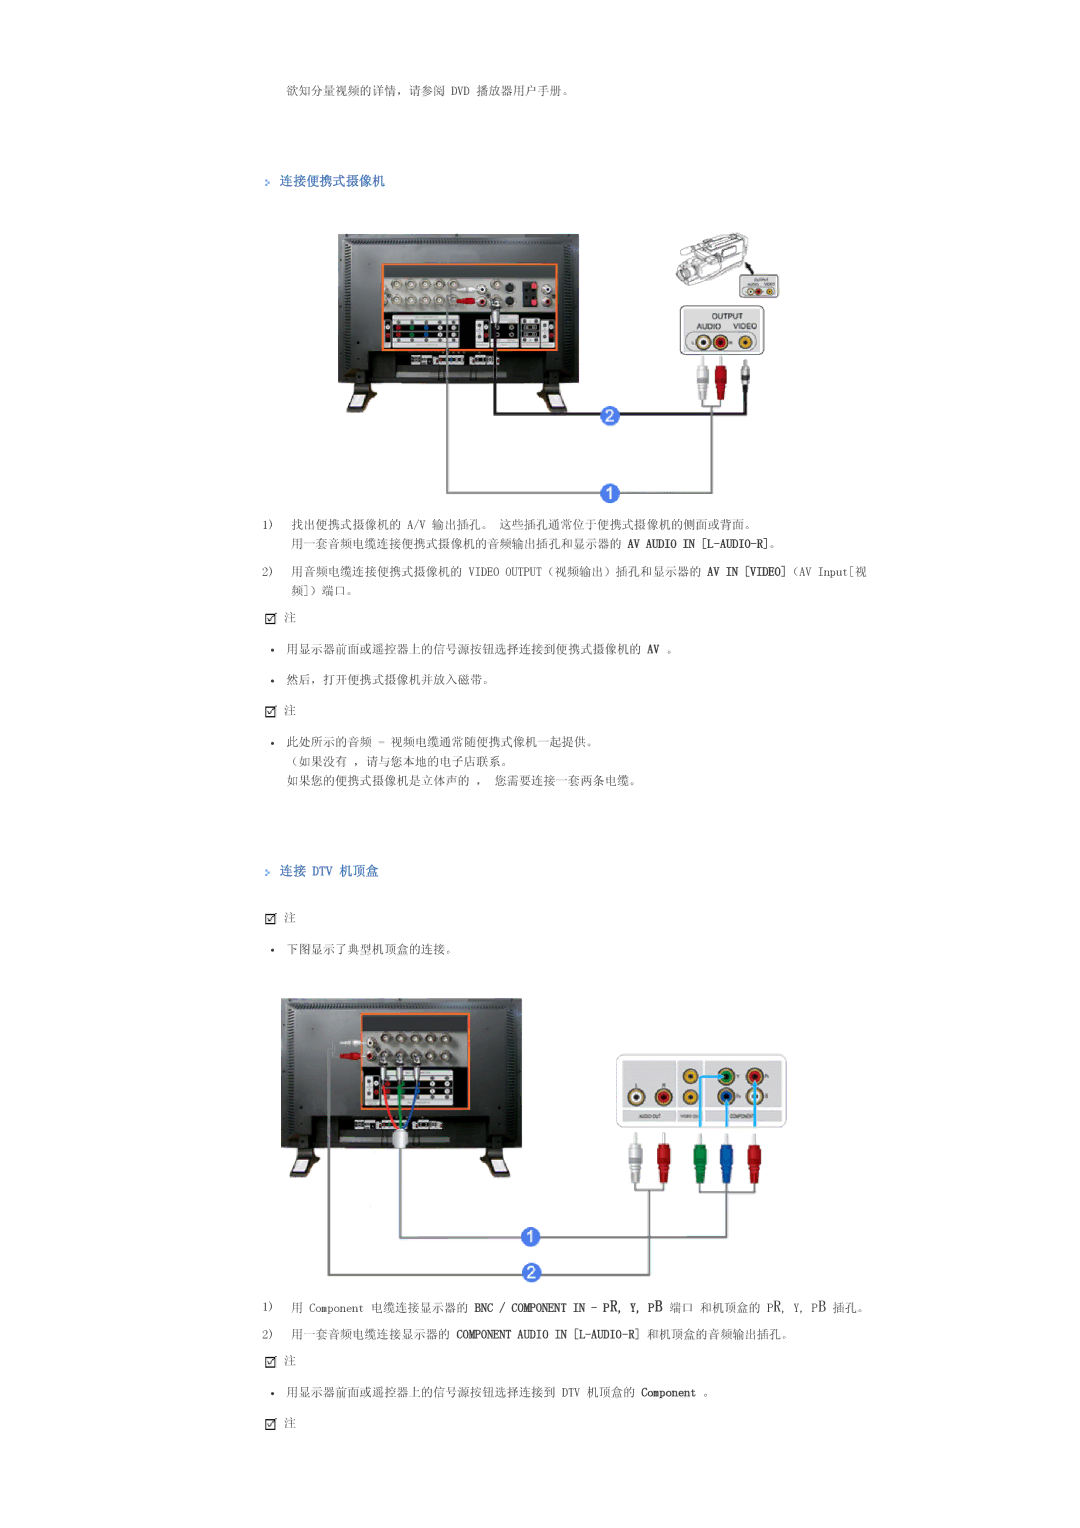 Samsung LS57BPTNB/EDC, LS57BPTNS/EDC manual 连接便携式摄像机, 连接 Dtv 机顶盒 